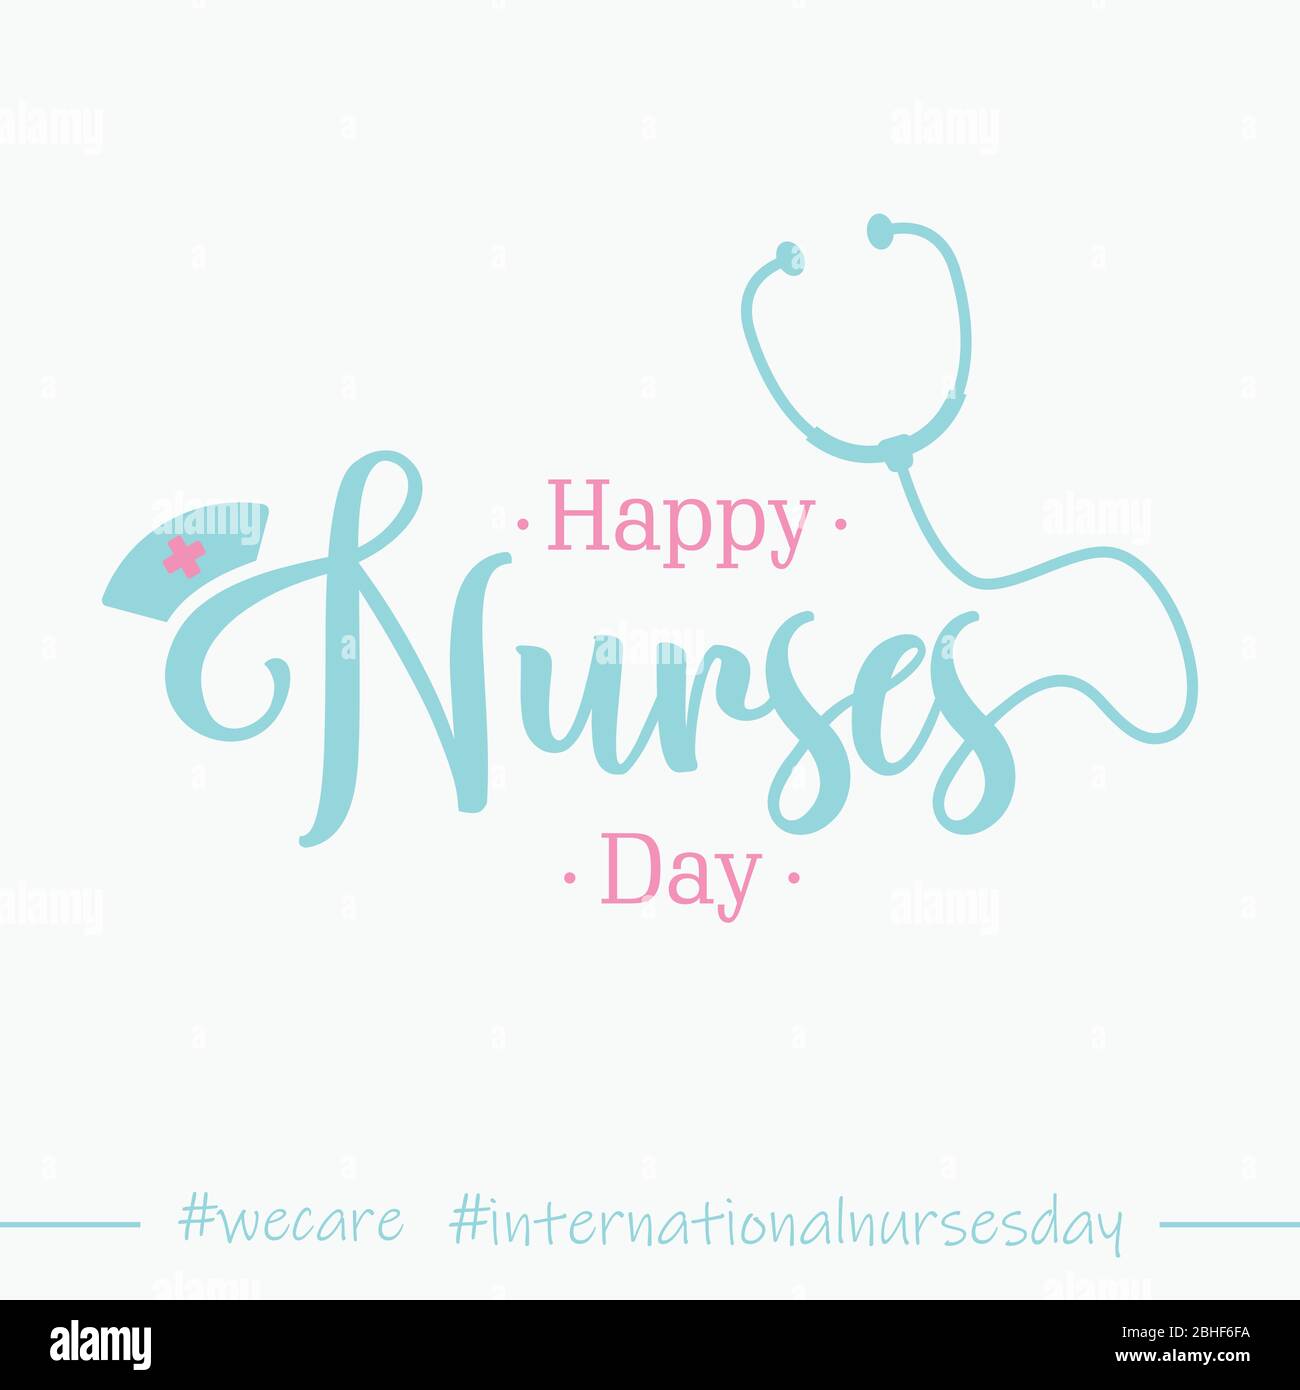 Lettering Happy Nurses Day for International Nurses Day background